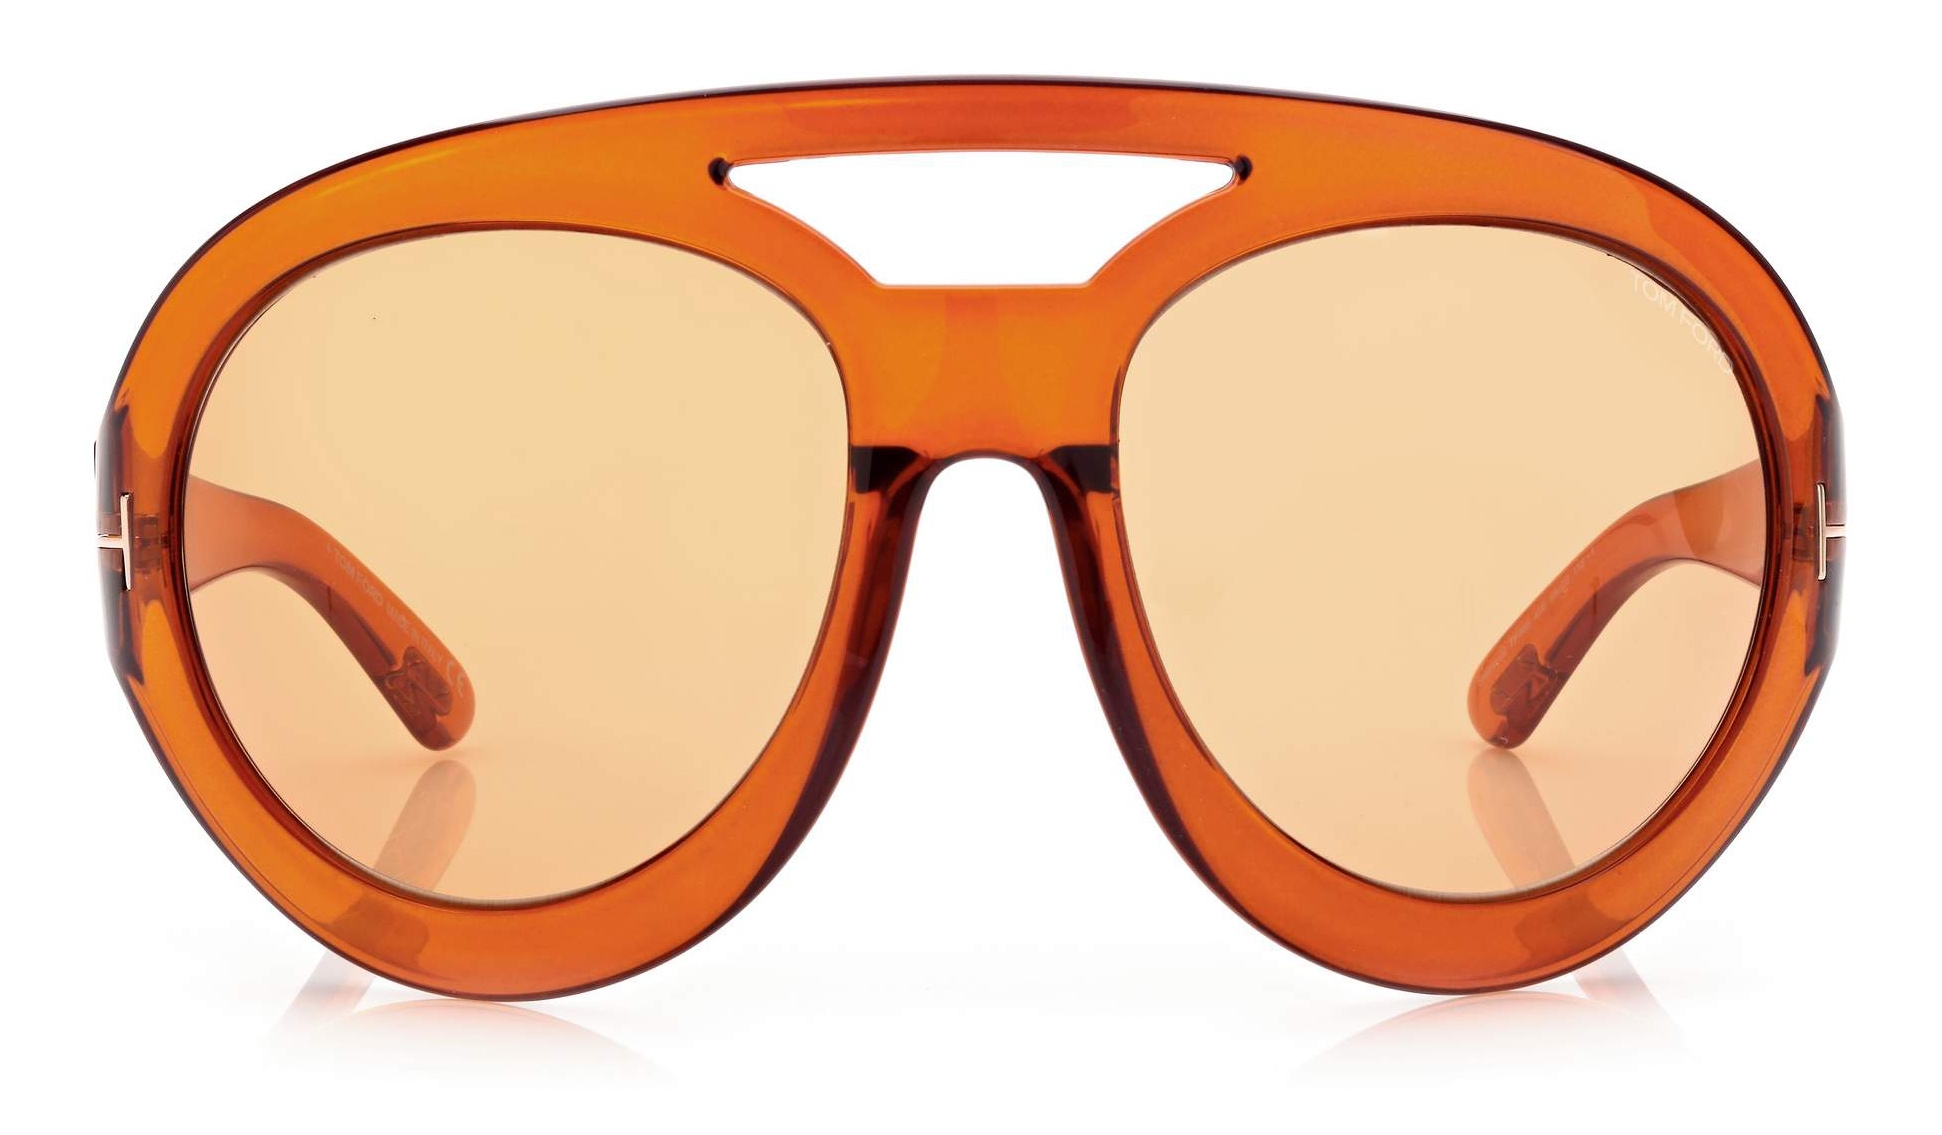 Tom Ford - Serena Sunglasses - Round Oversized Sunglasses - Light Brown -  FT0886 - Sunglasses - Tom Ford Eyewear - Avvenice